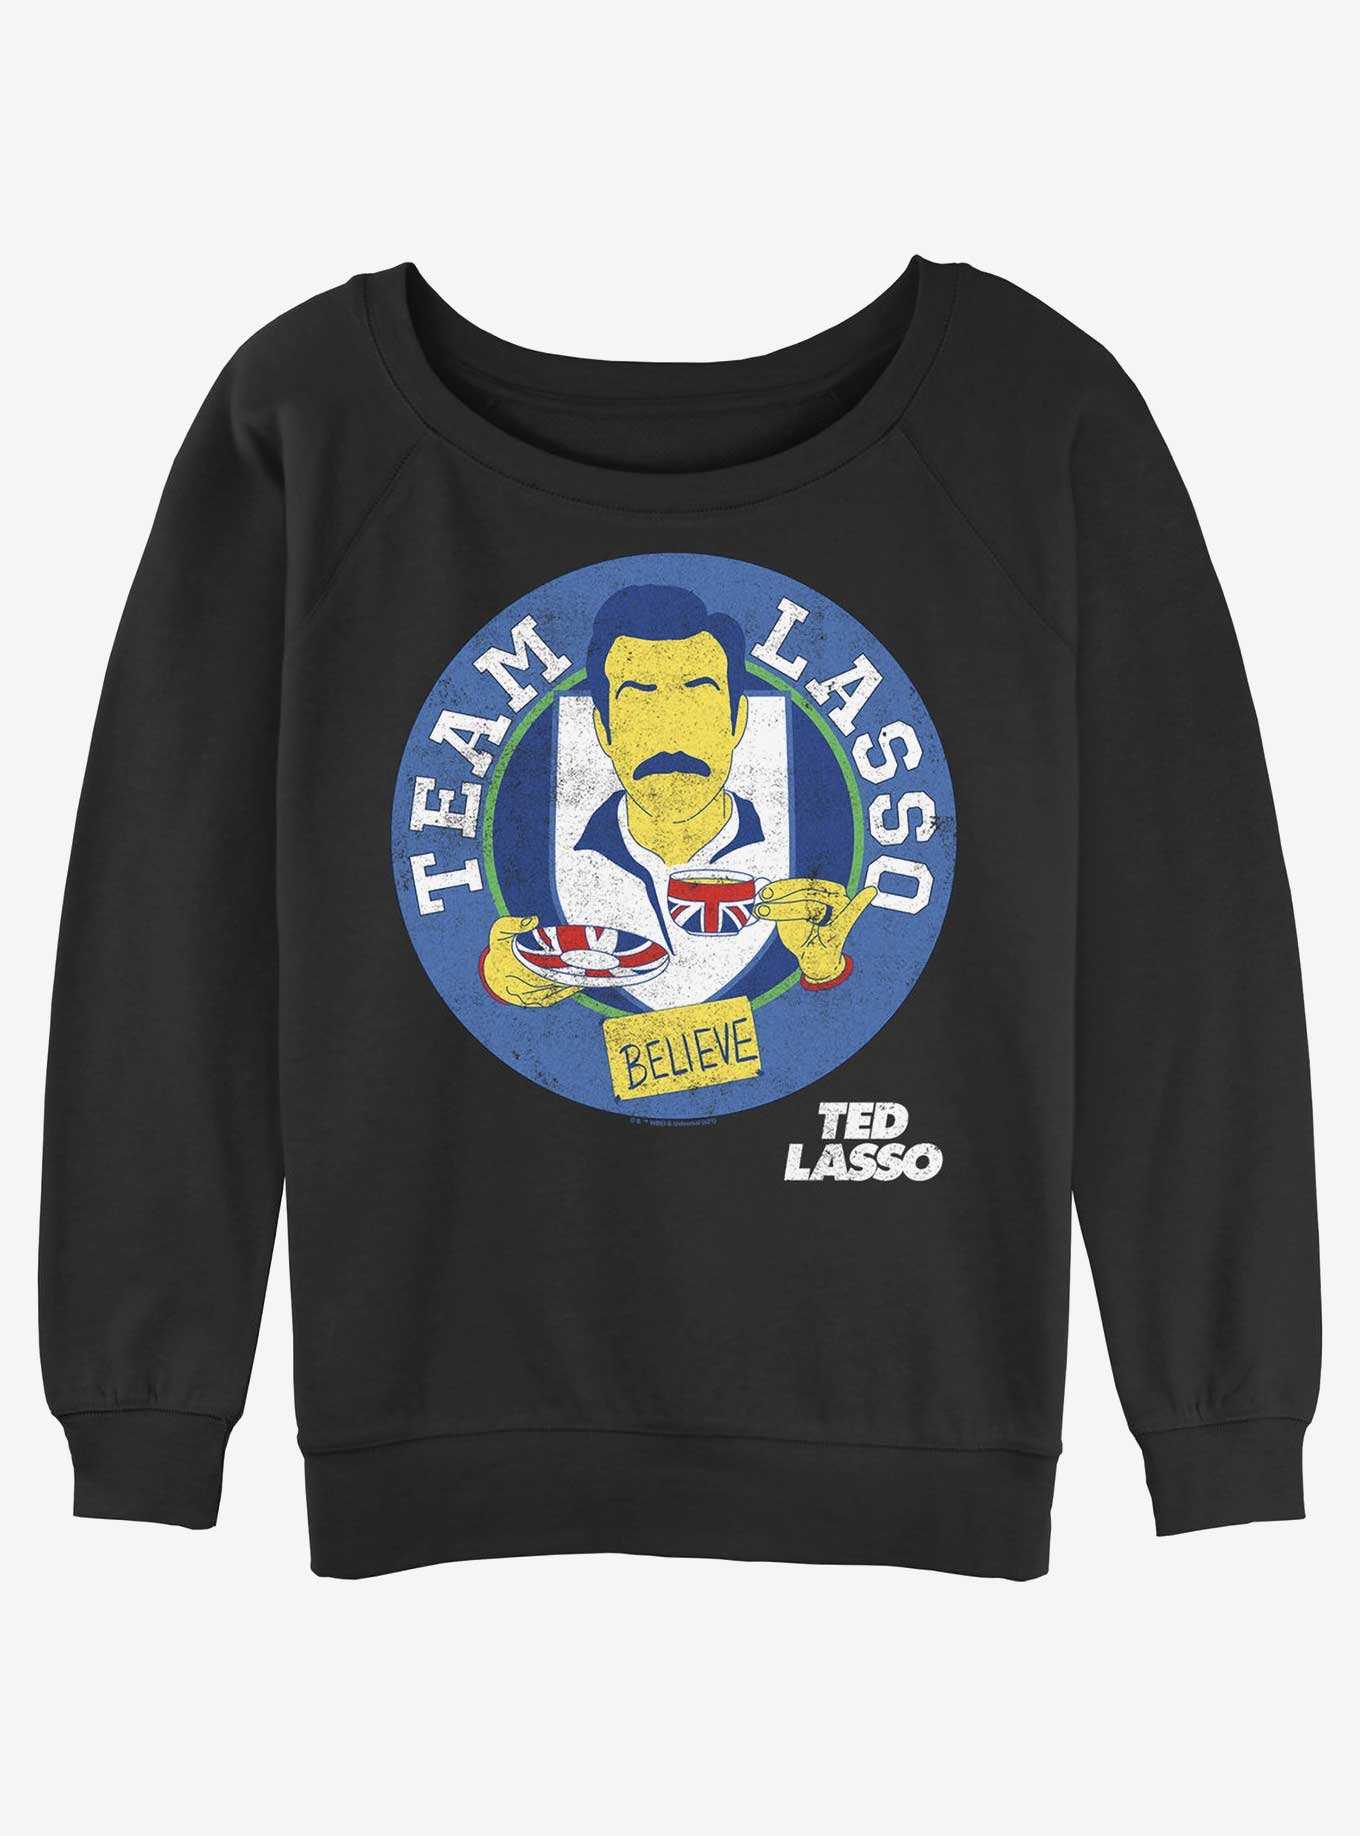 Ted Lasso Team Believe Girls Slouchy Sweatshirt, , hi-res